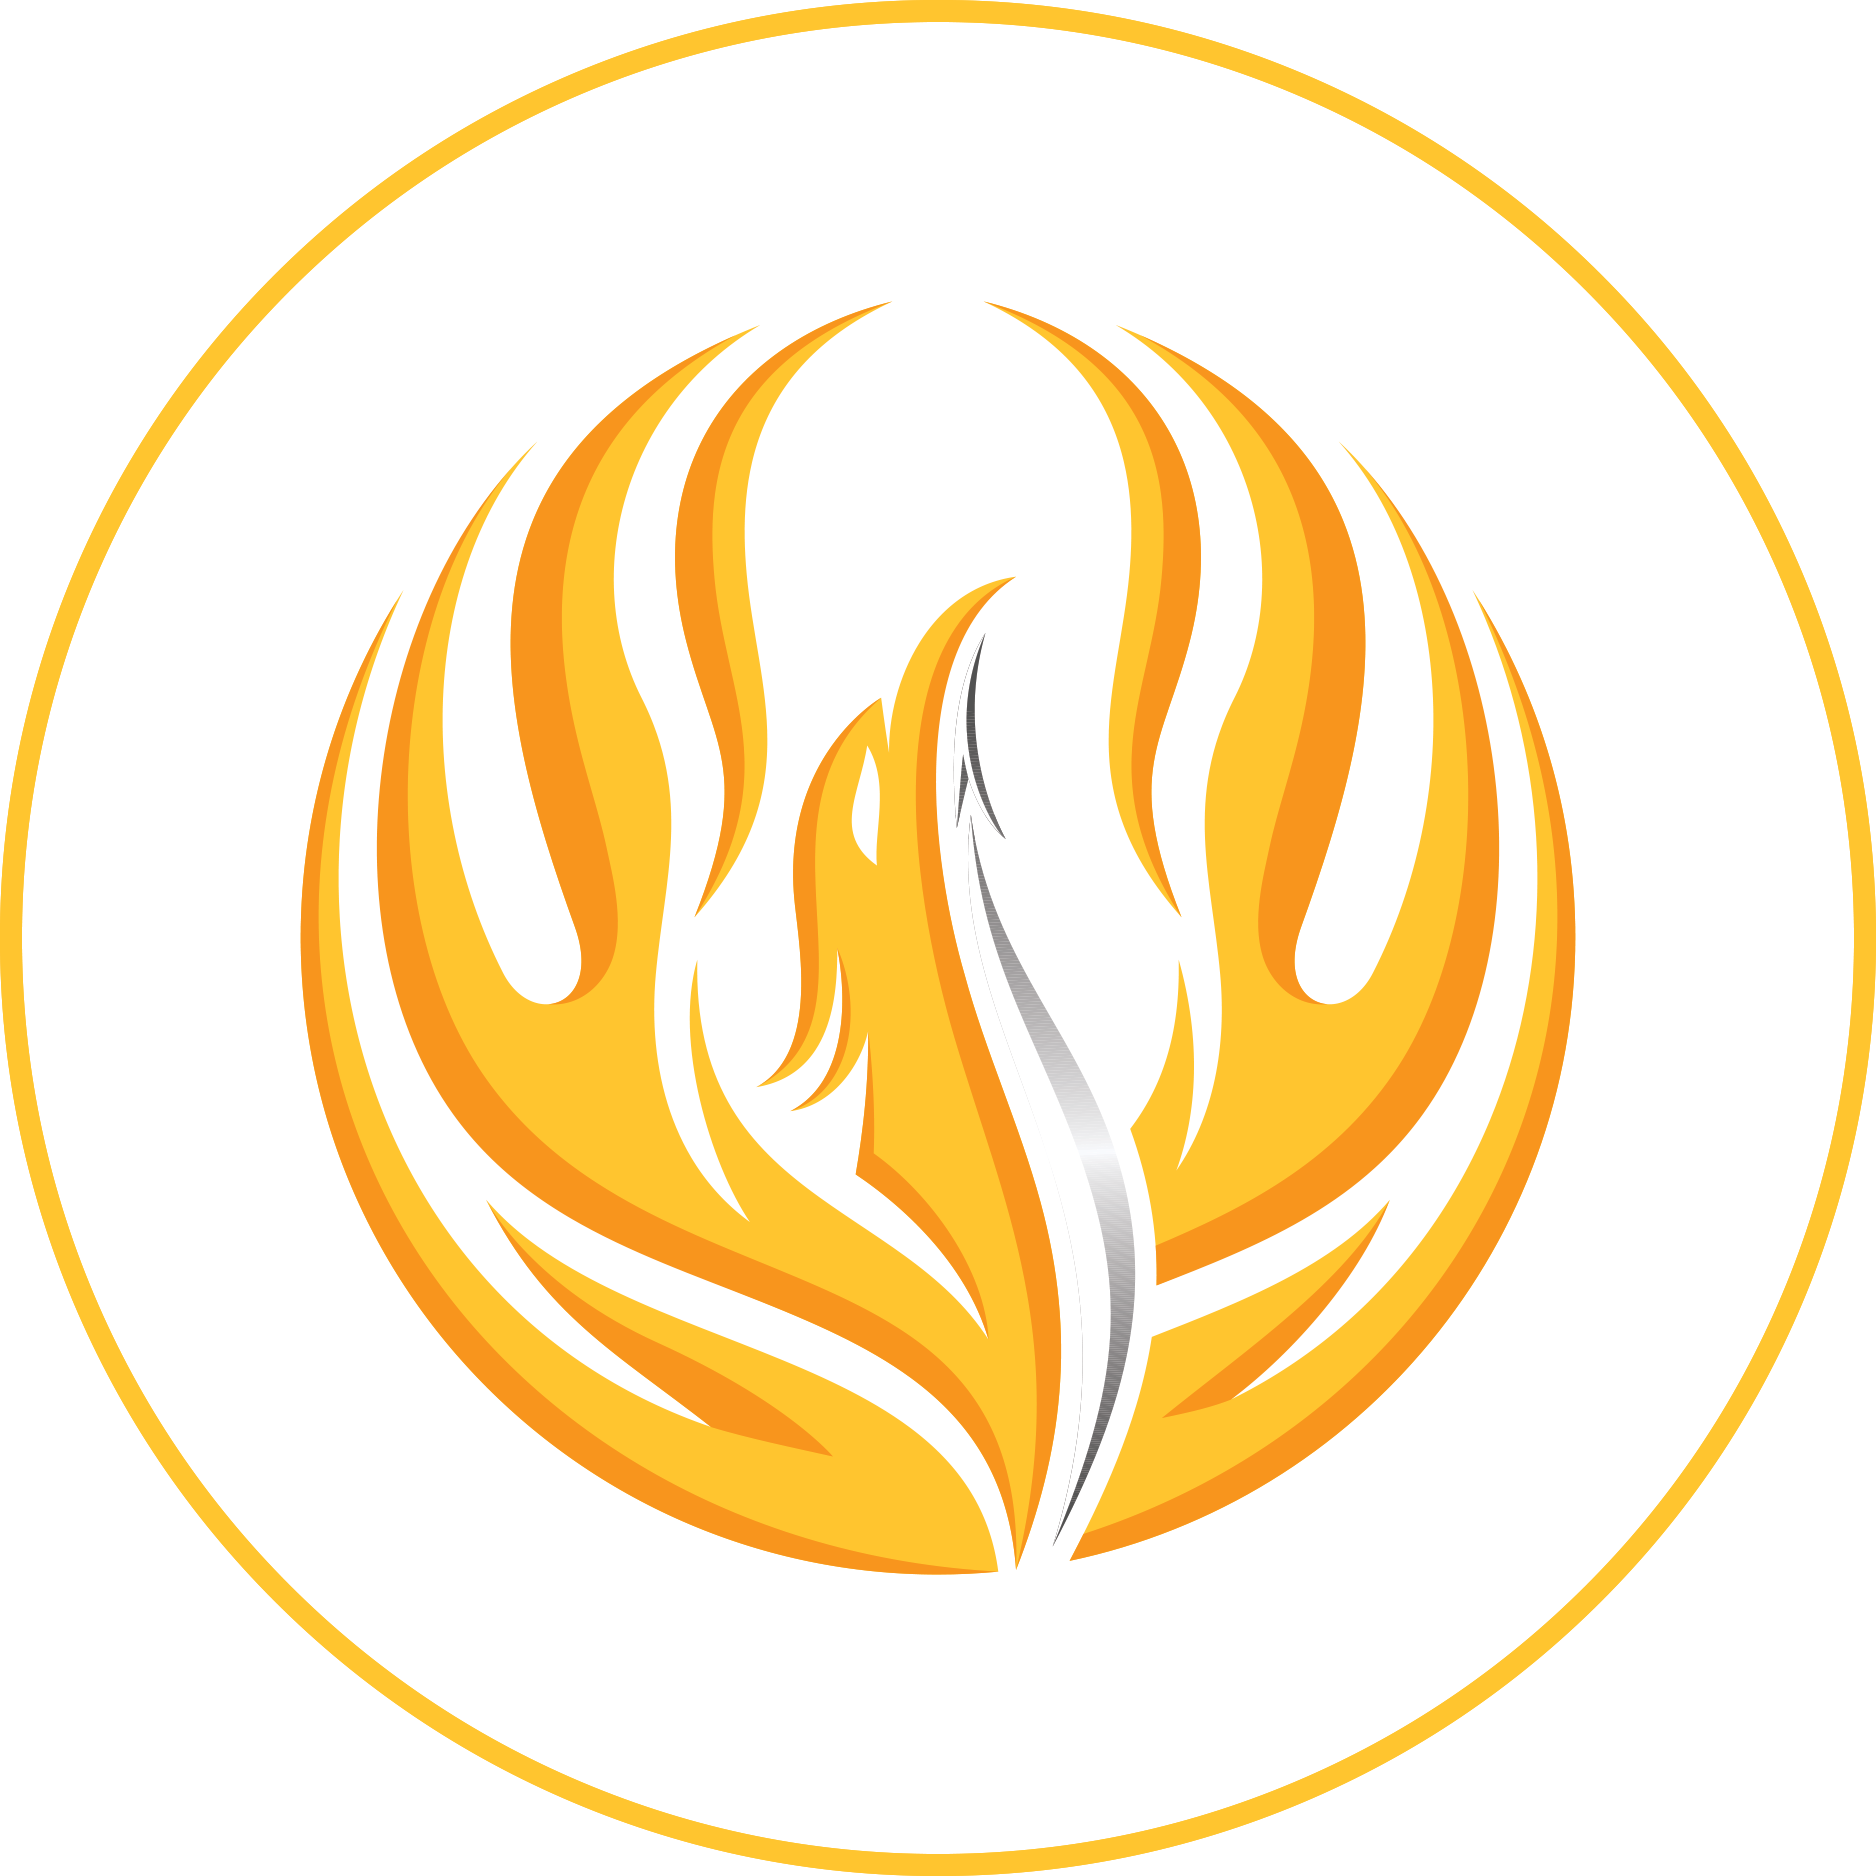 Hillcroft Lacrosse Club London, logo